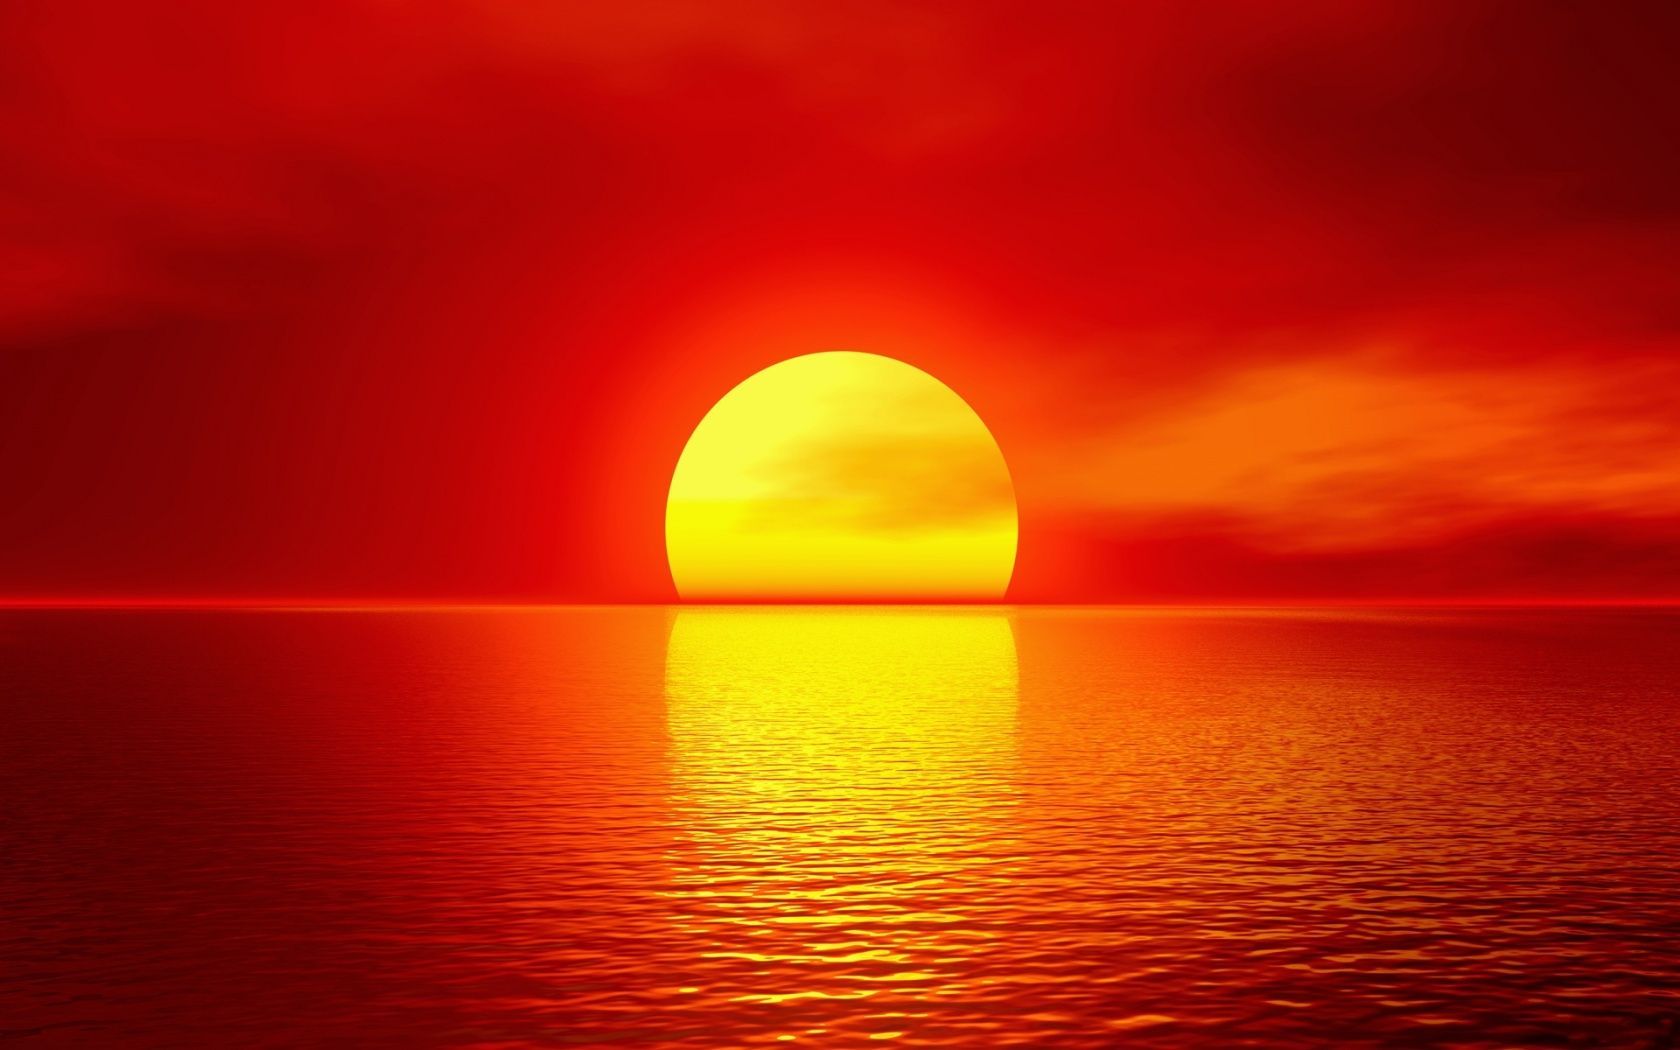 Imágenes del sol | Fondos de pantalla de la belleza del sol rojo fondo de pantalla